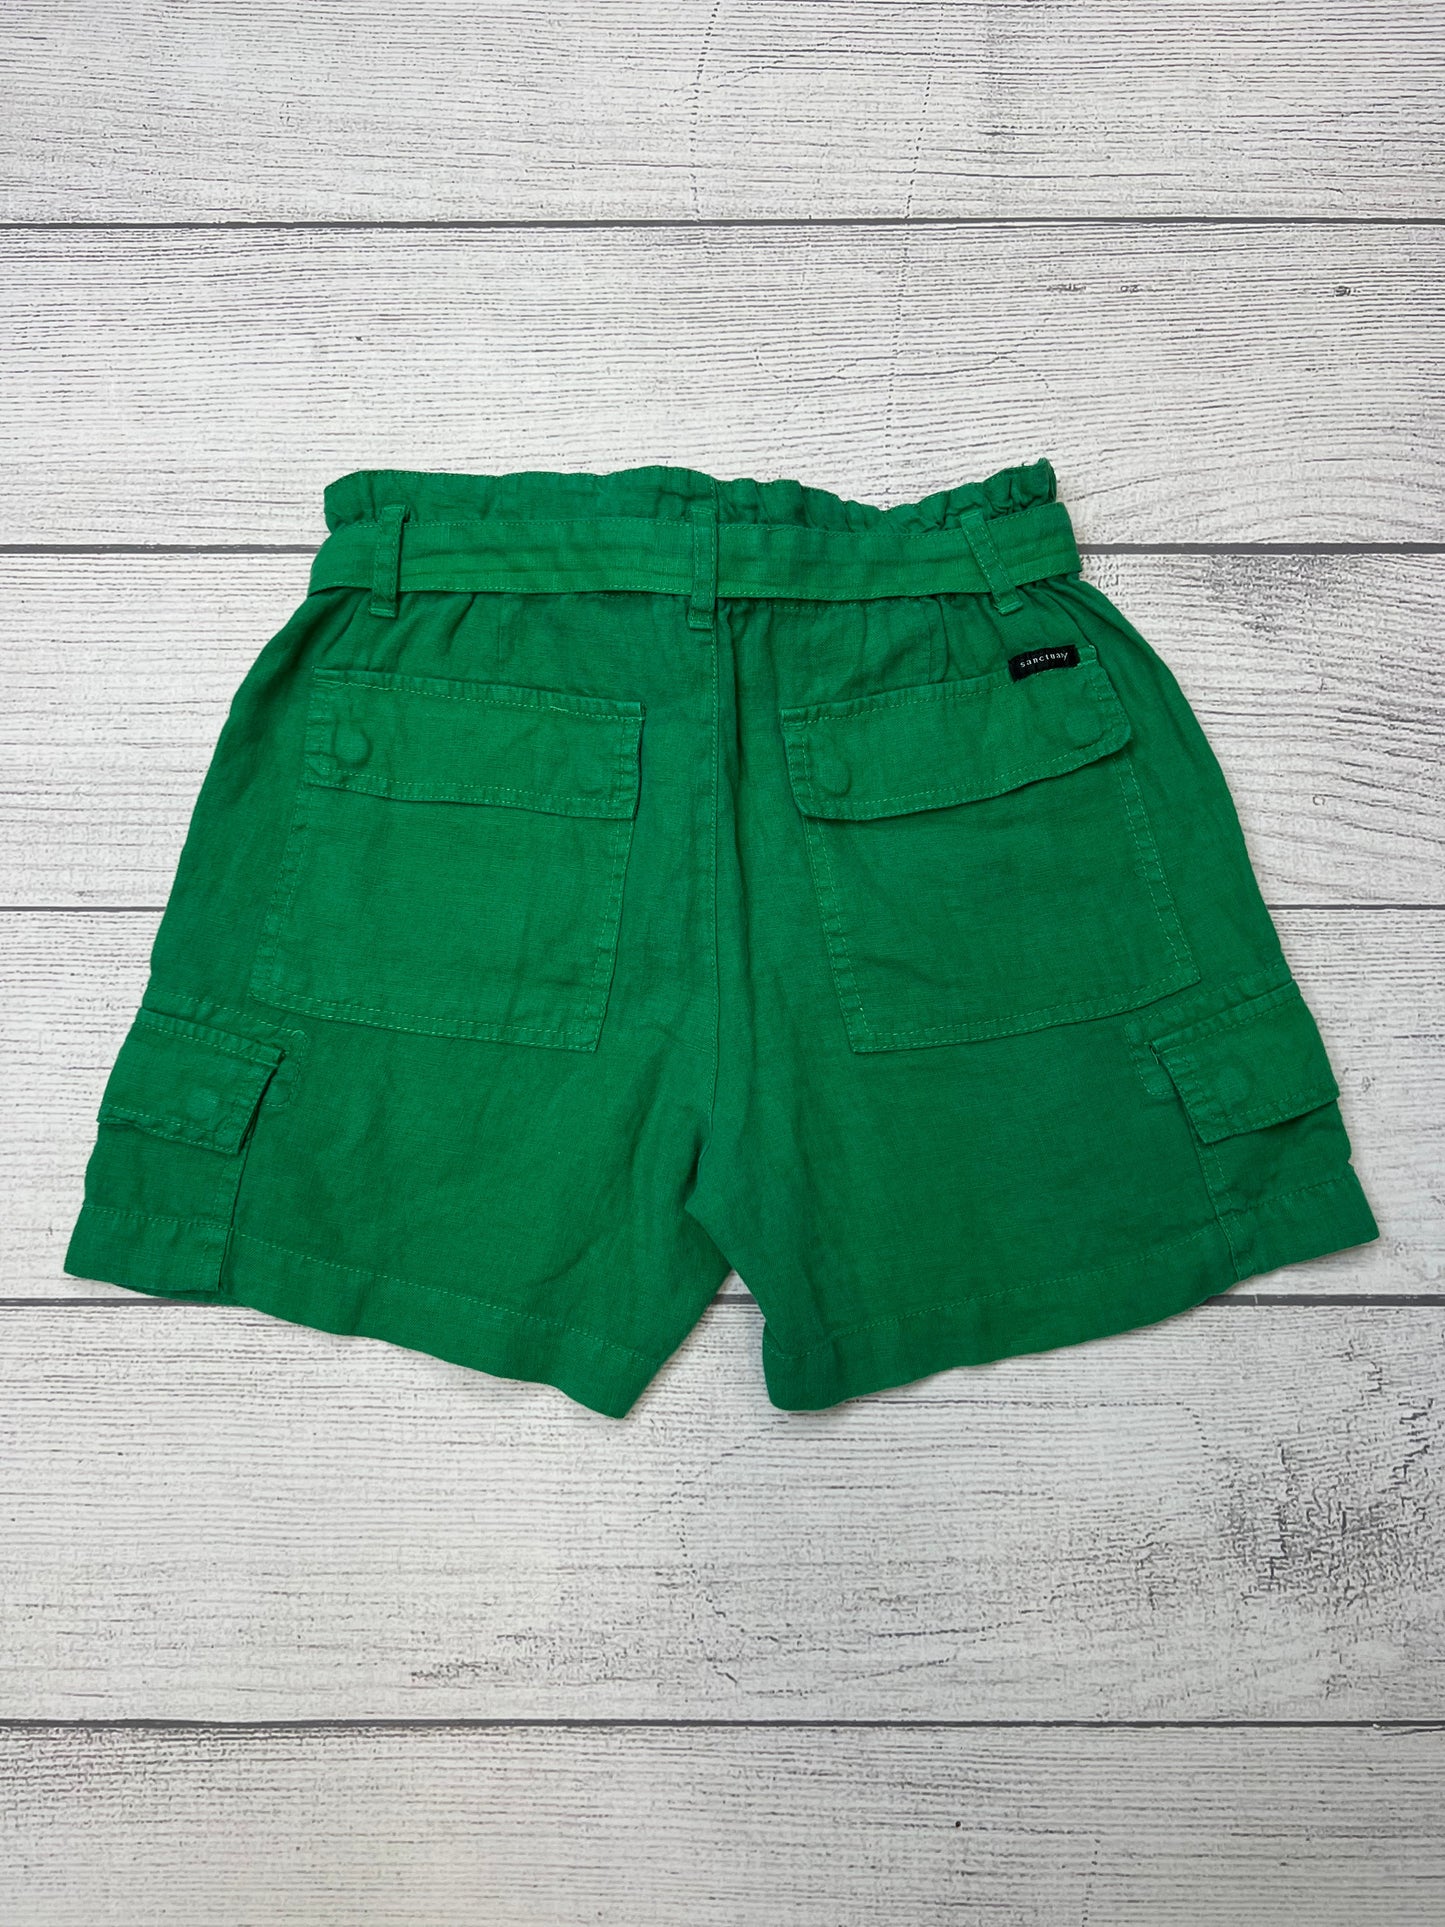 Shorts By Sanctuary  Size: 2